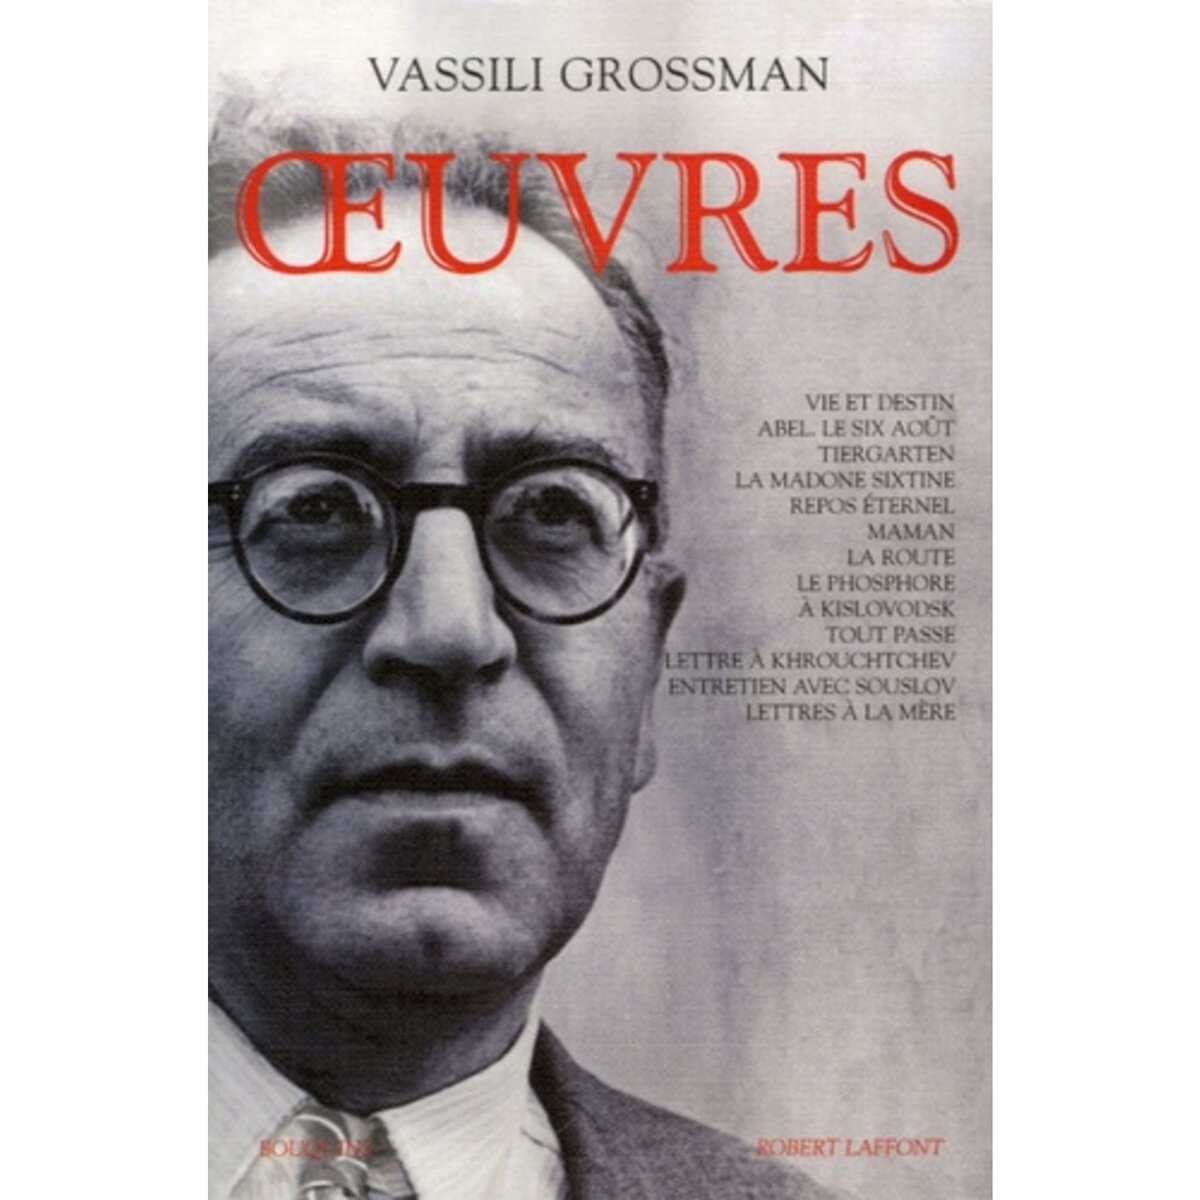  OEUVRES, Grossman Vassili